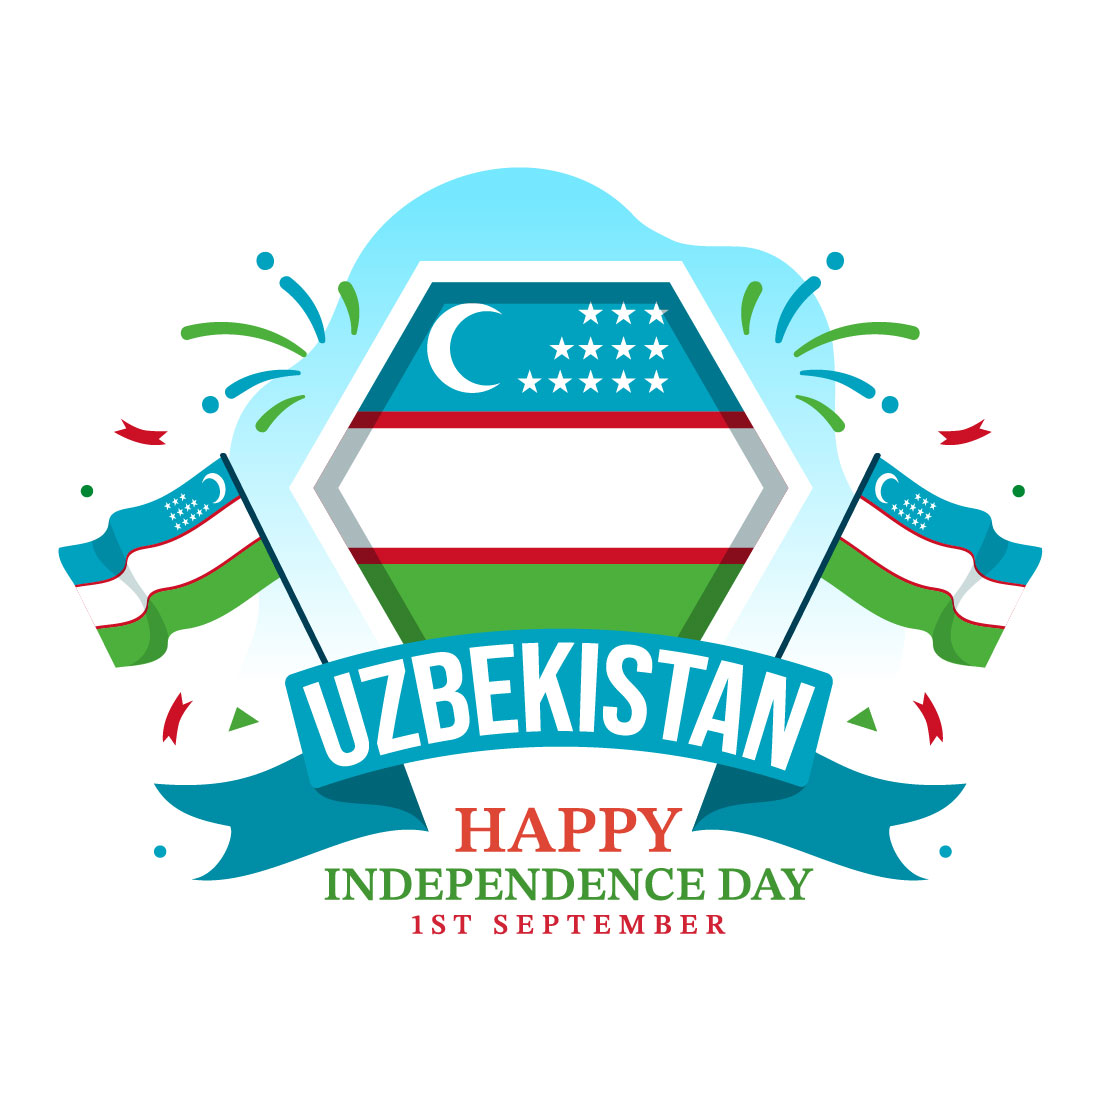 15 Uzbekistan Independence Day Illustration cover image.